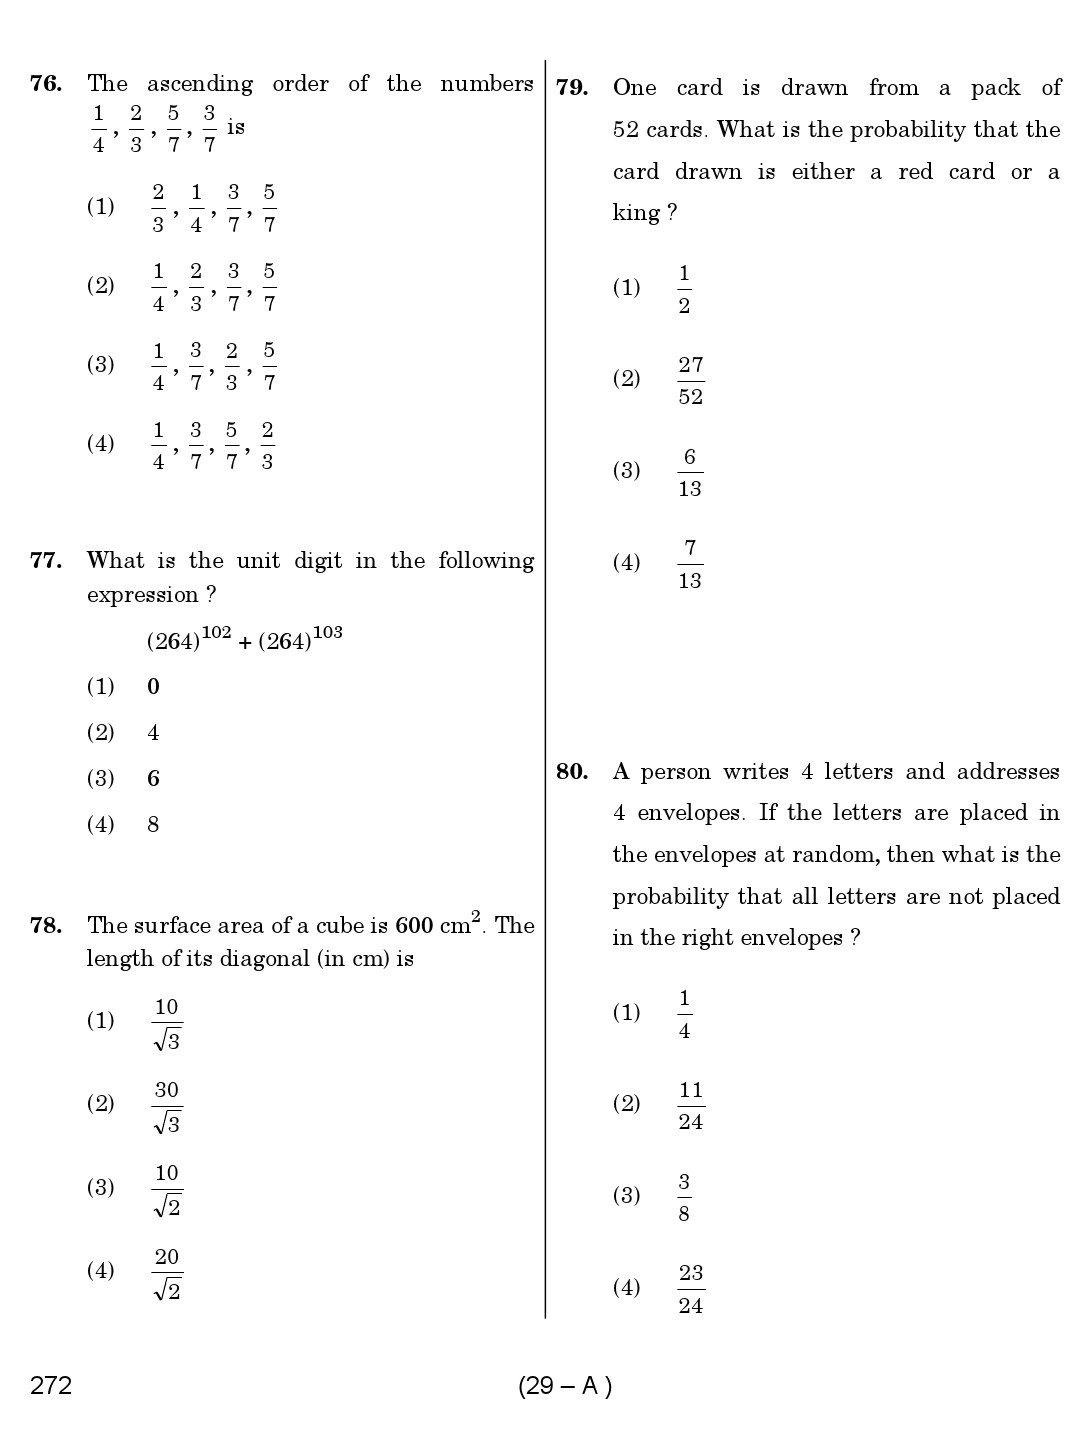 Karnataka PSC Mathematics Teacher Exam Sample Question Paper Subject code 272 29